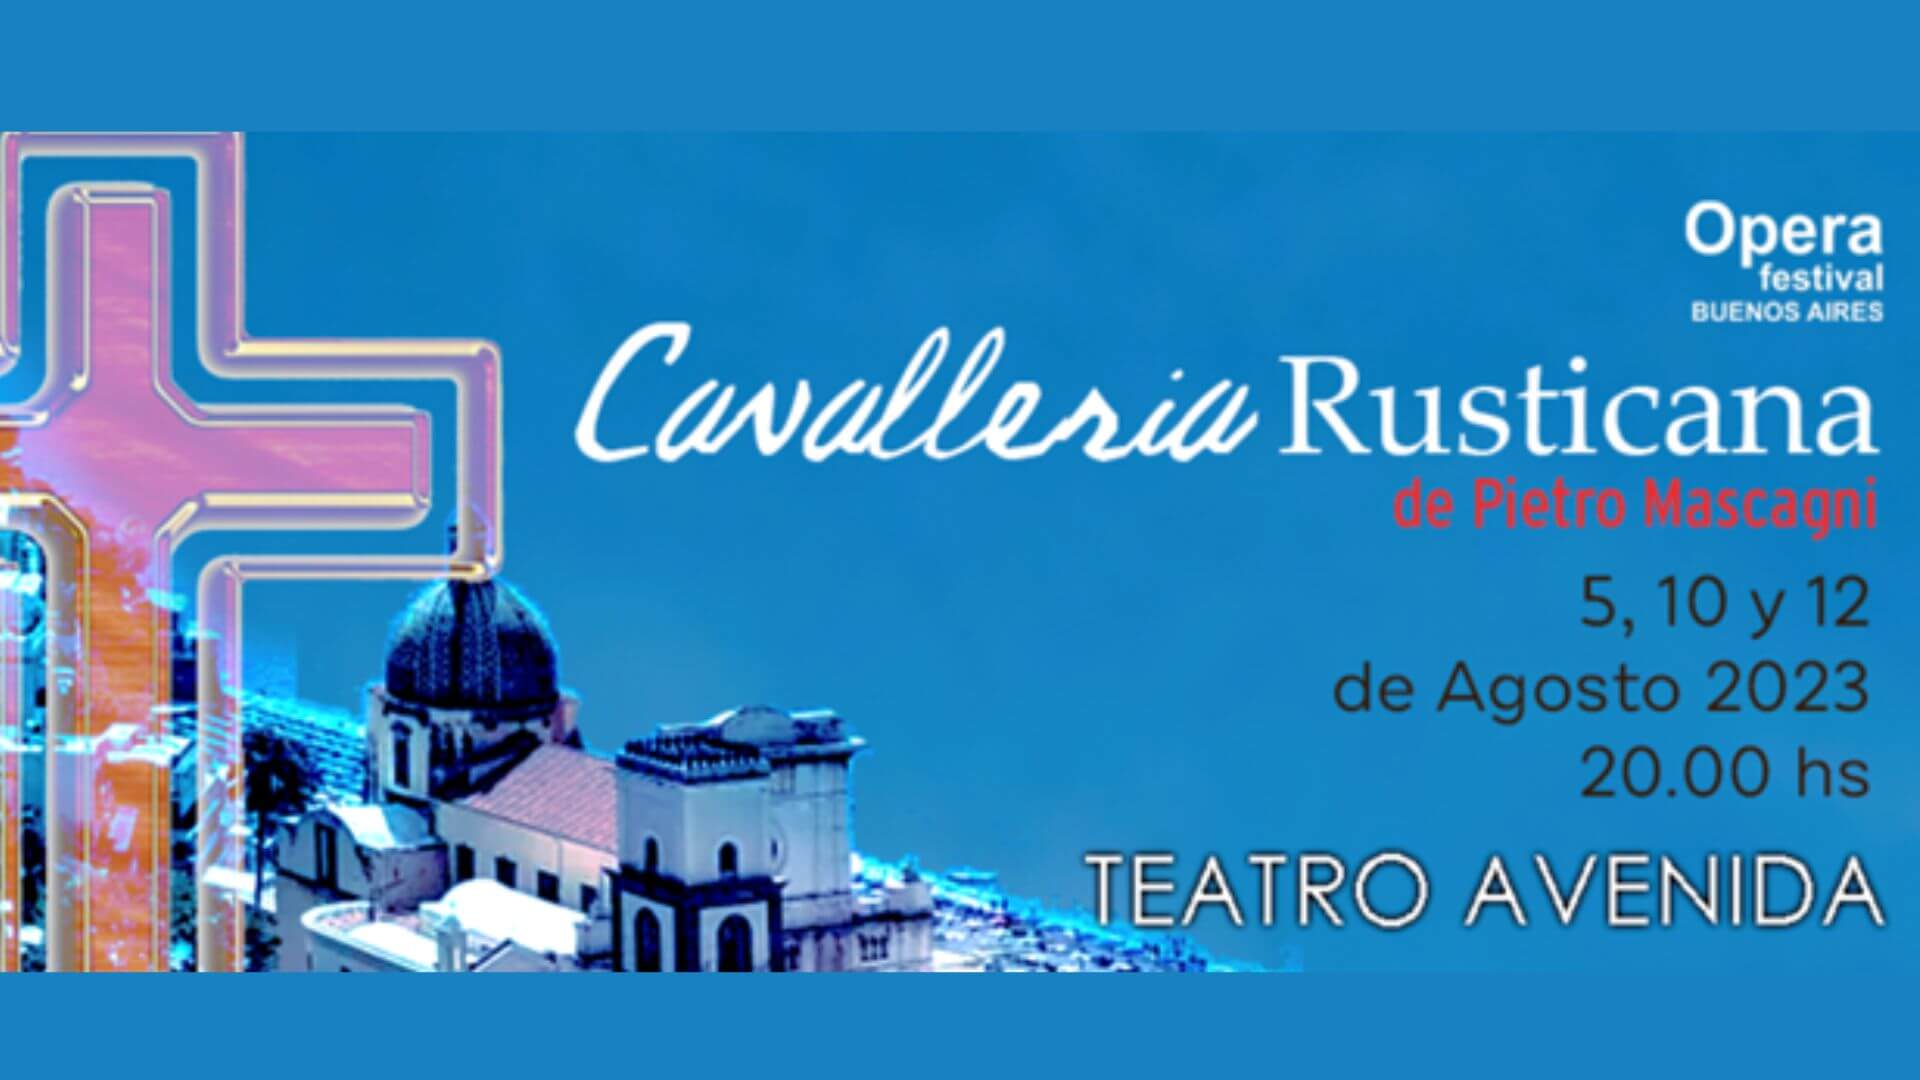 Ópera Festival Buenos Aires presenta Cavalleria Rusticana